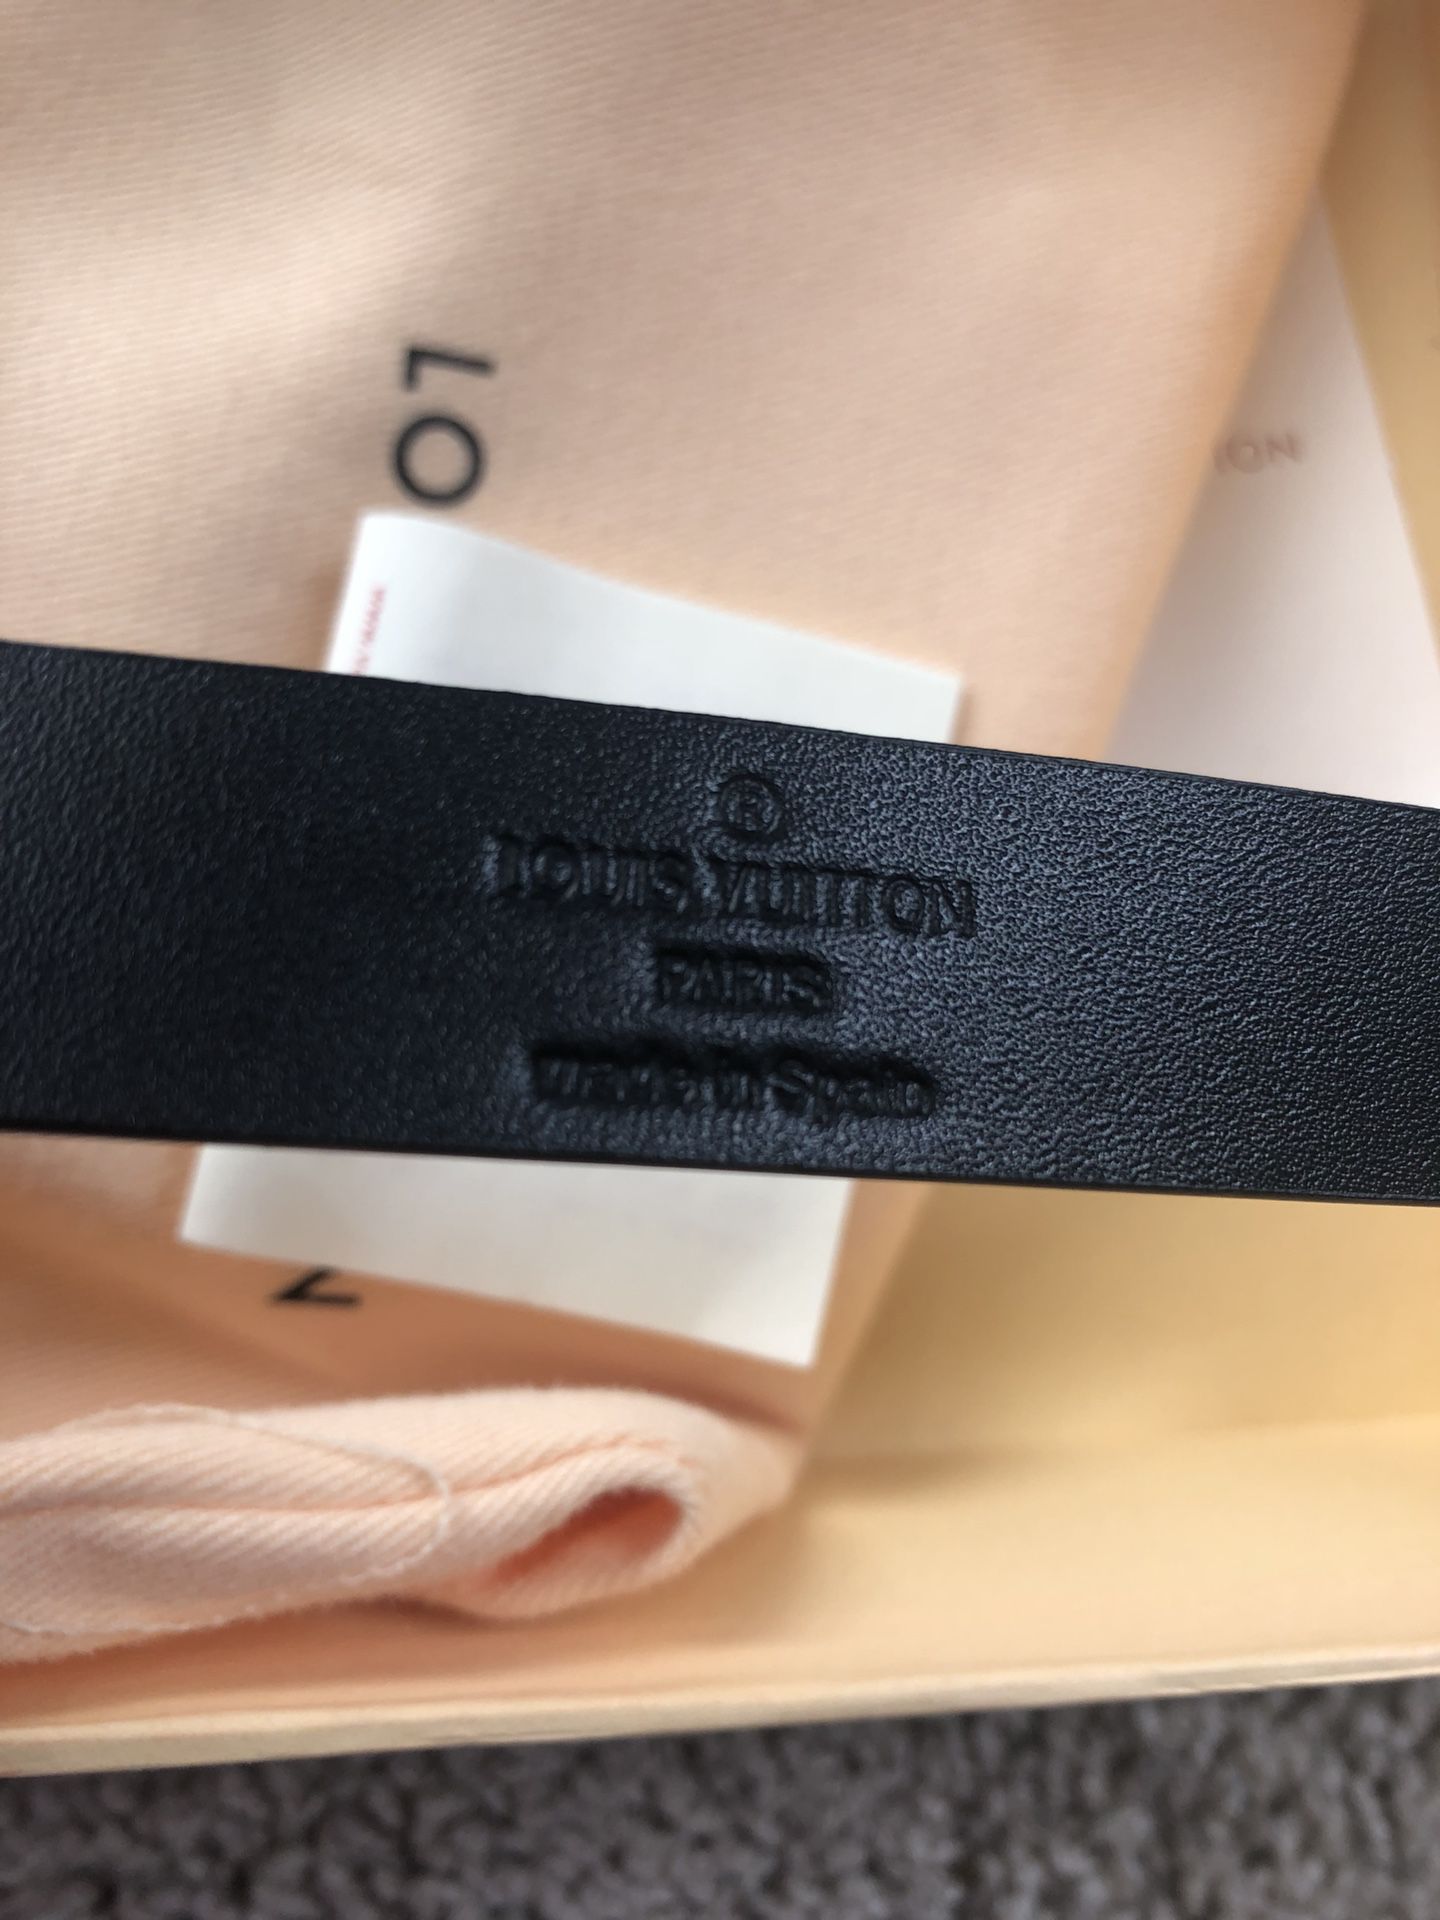 Authentic Louis Vuitton “LV” 20 mm Women's Belt $150 for Sale in Orlando,  FL - OfferUp